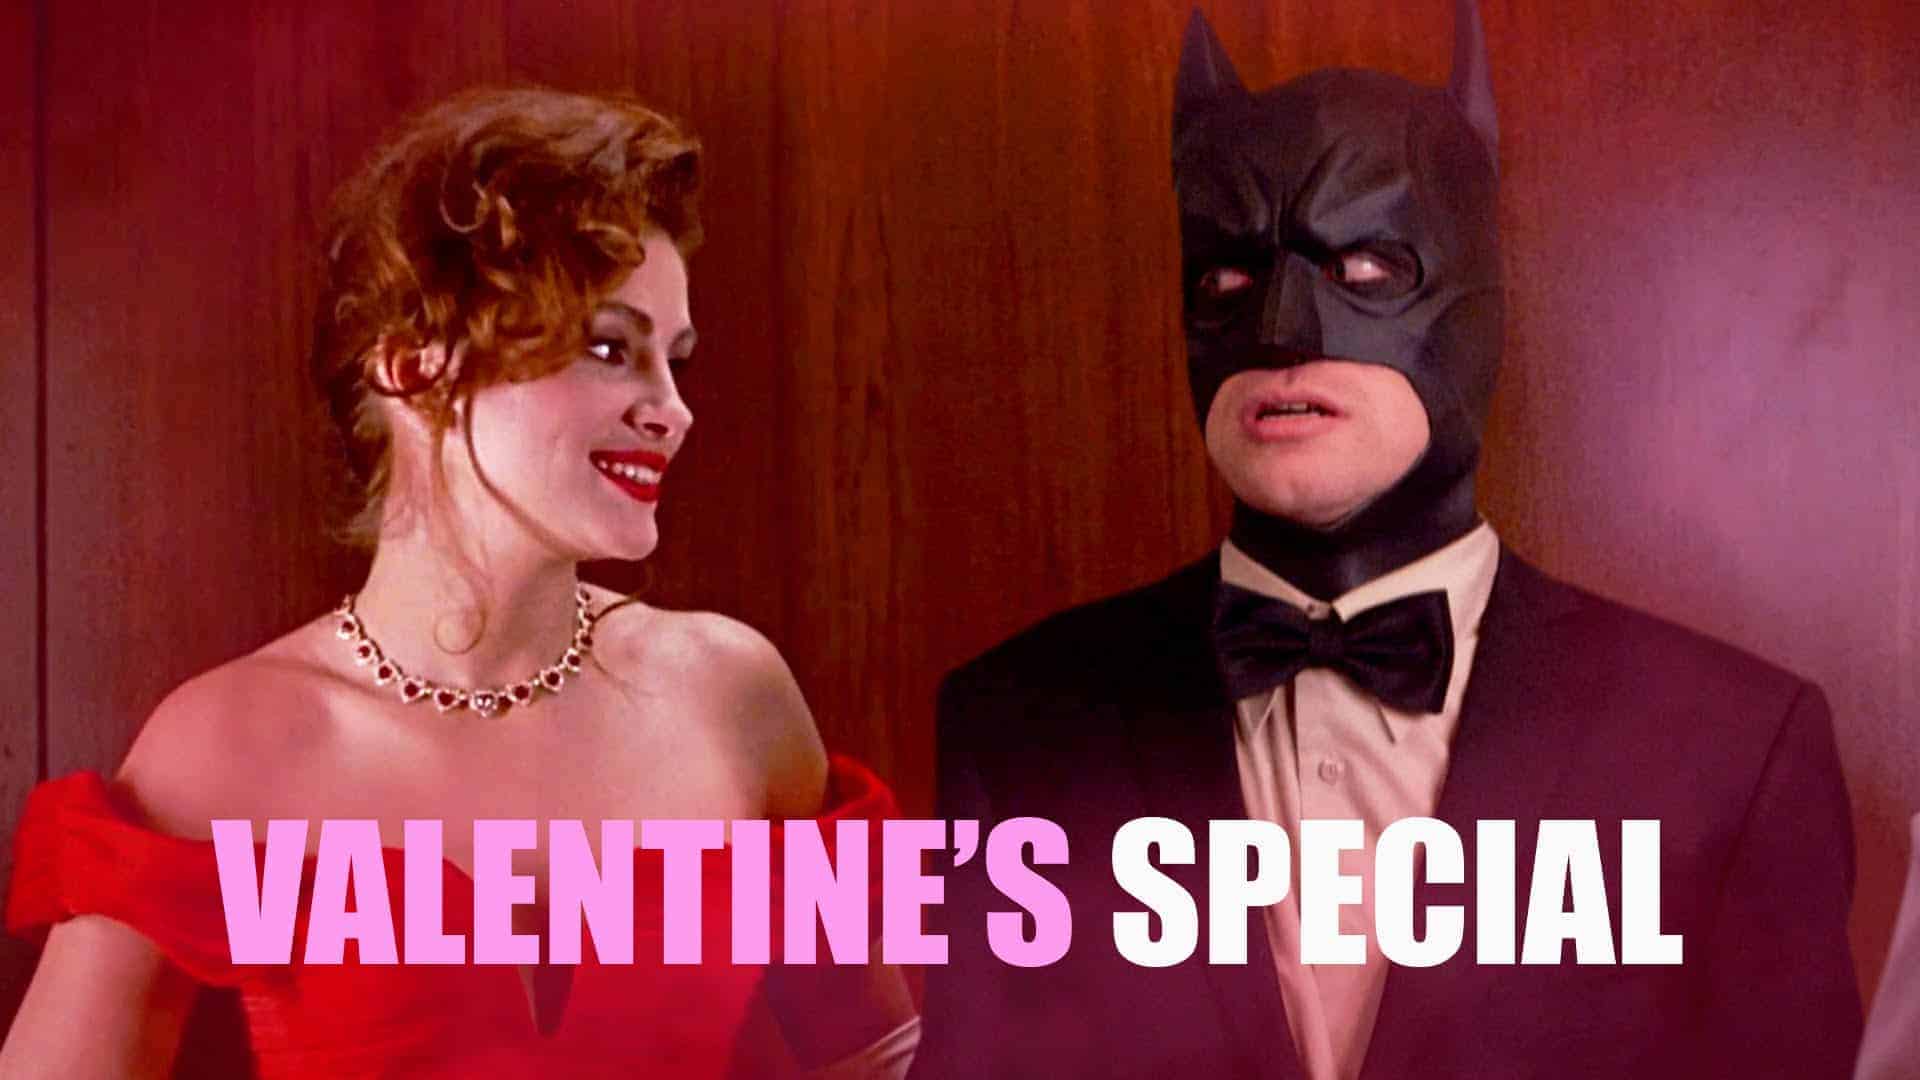 Valentine's Special: Batman i romantiske filmer